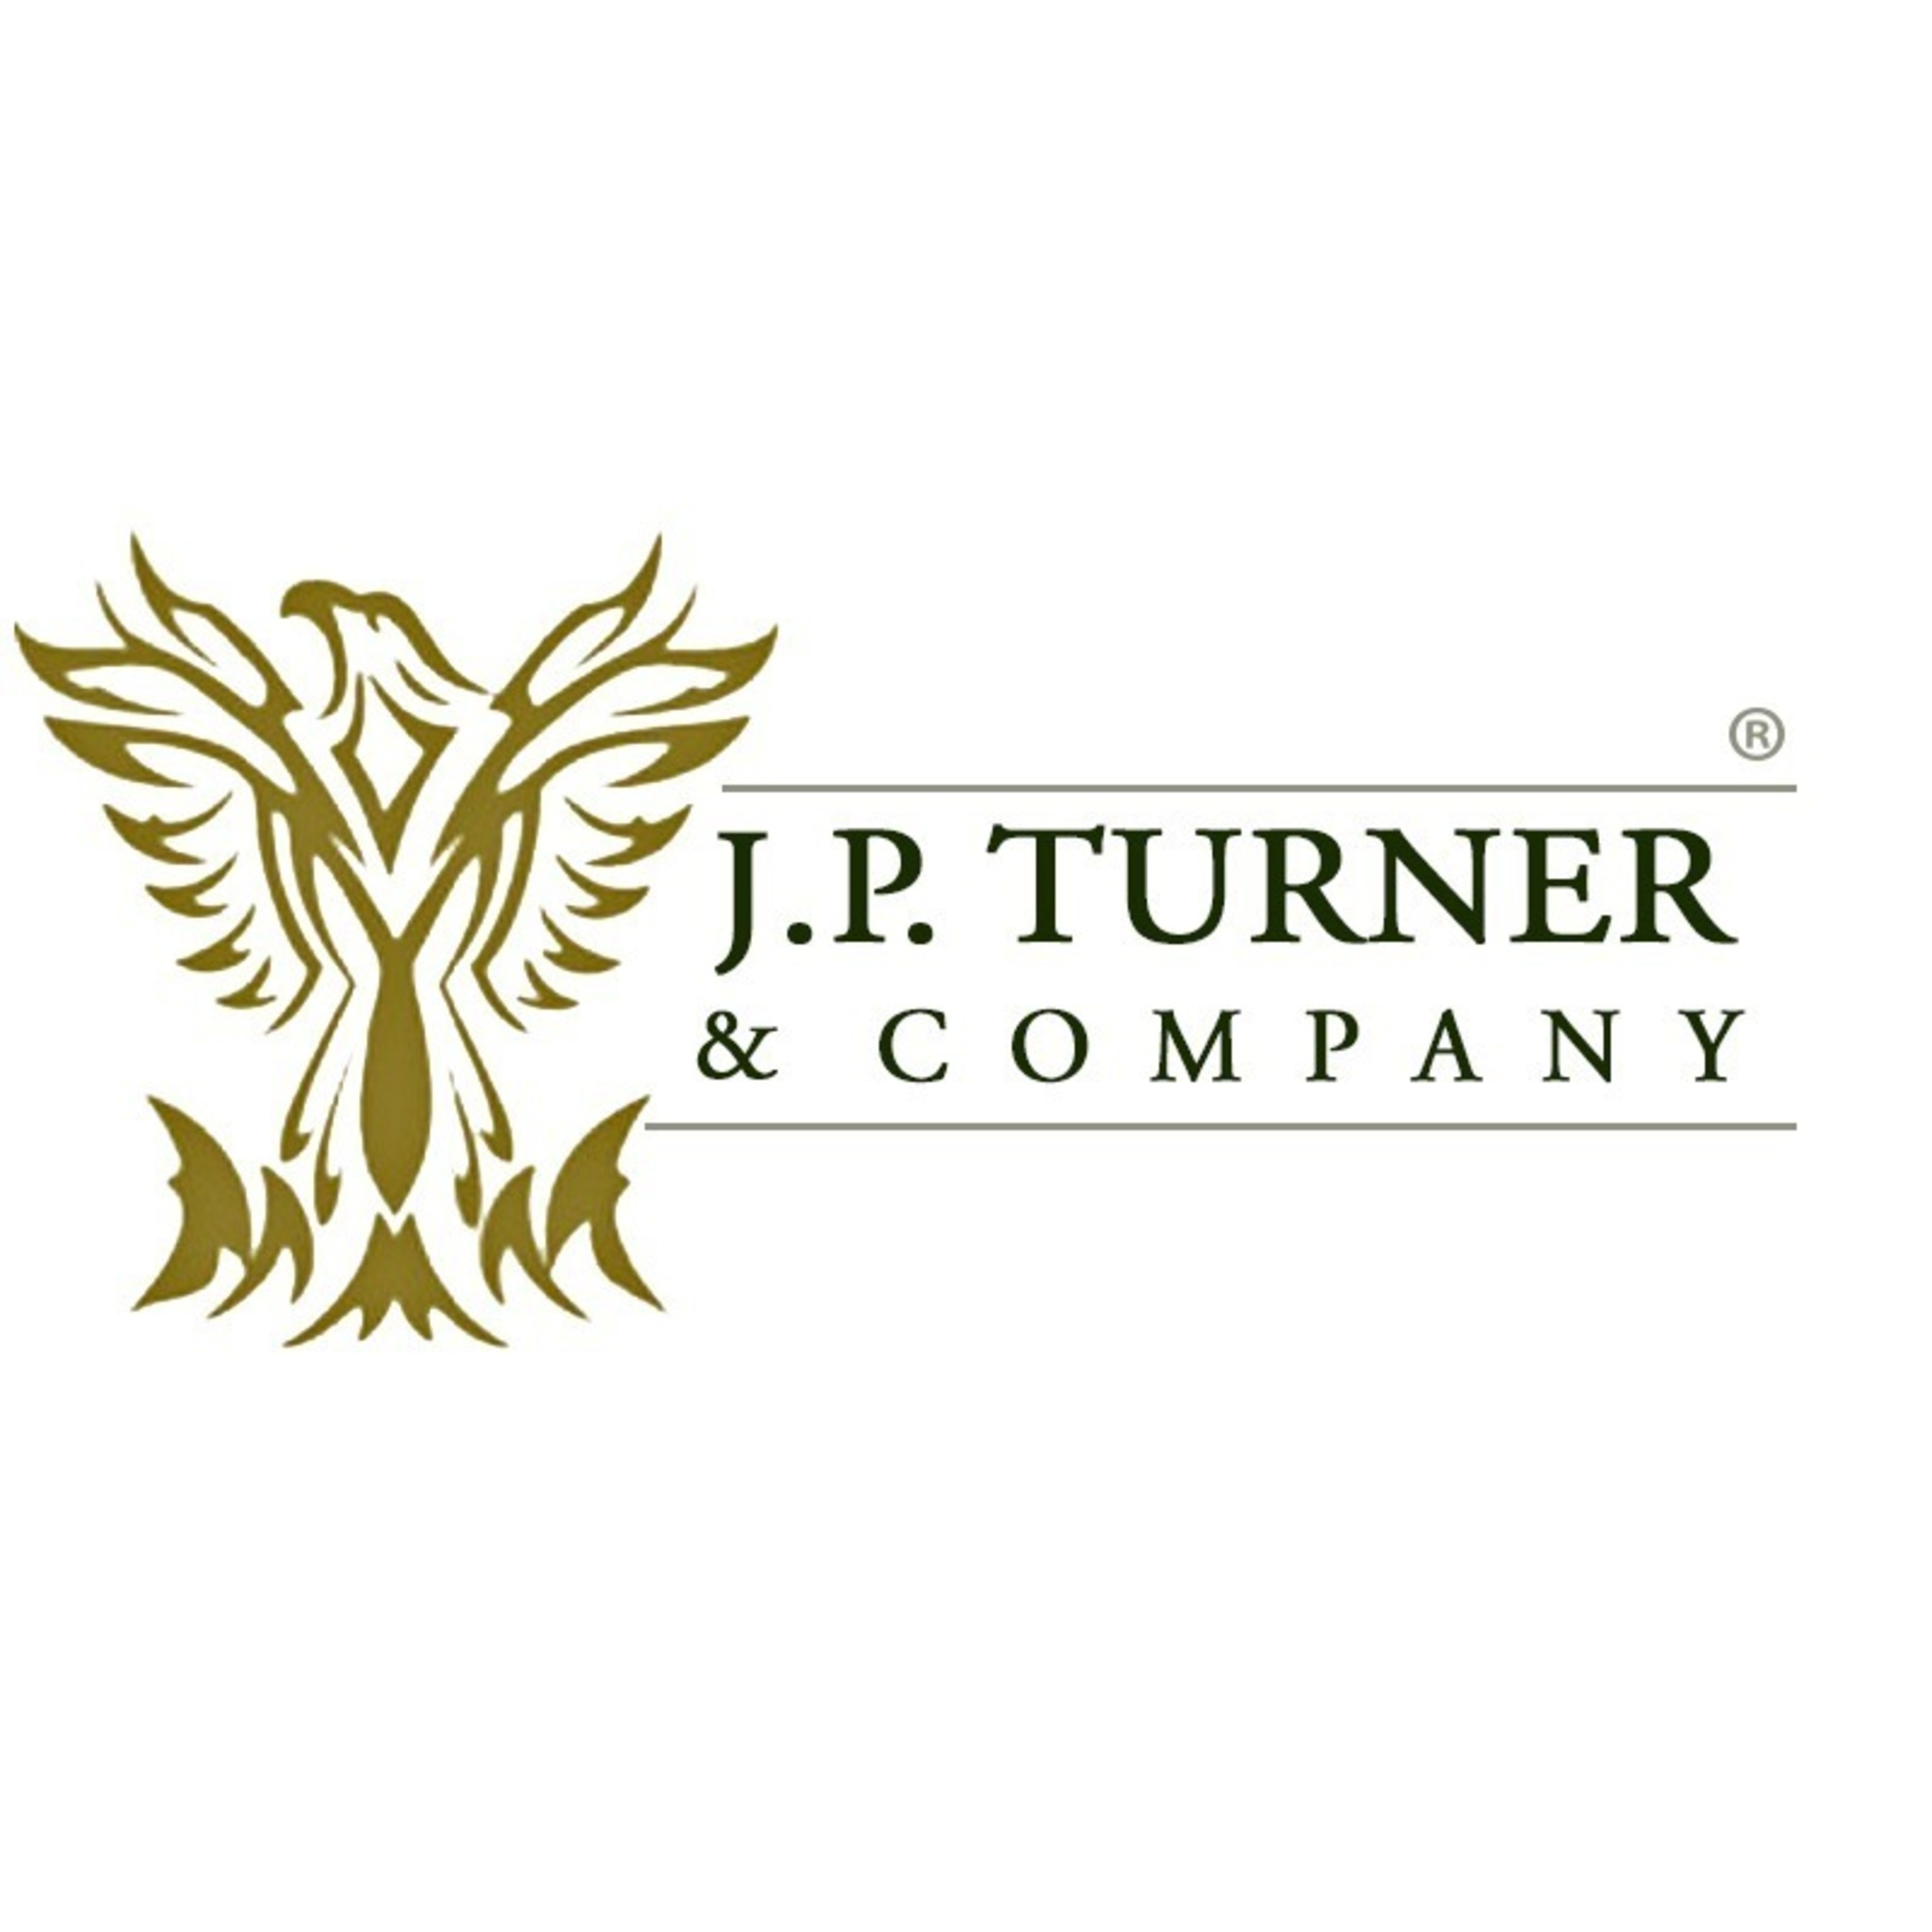 J.P. Turner & Company (PRNewsFoto/J.P. Turner & Company, LLC)